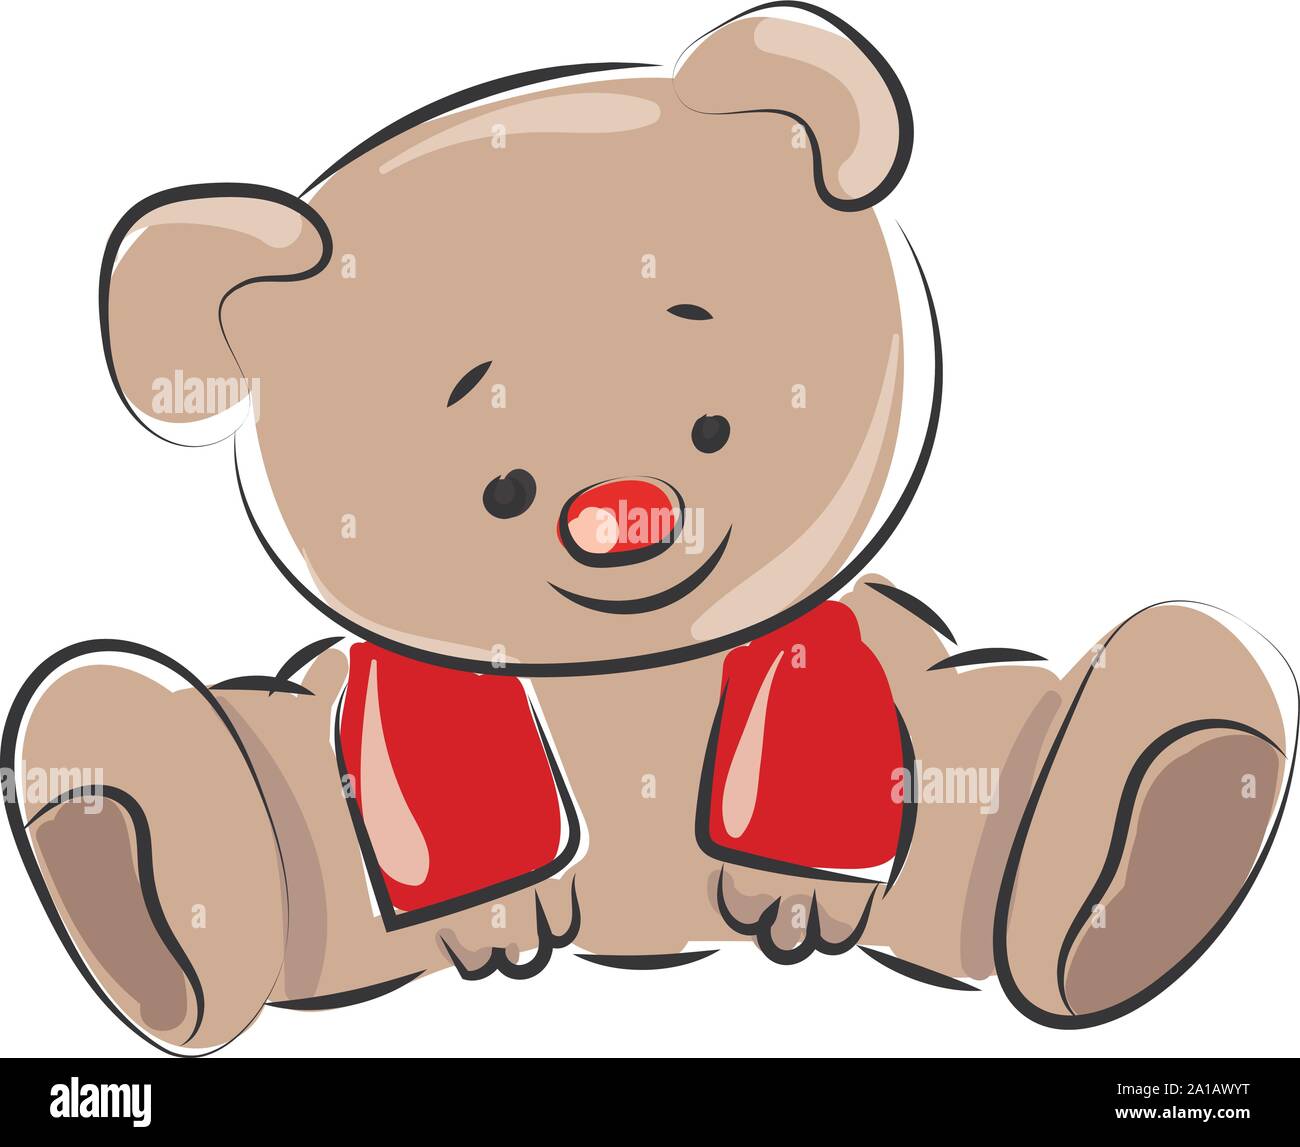 Toy bear, illustration, vector on white background. Stock Vector